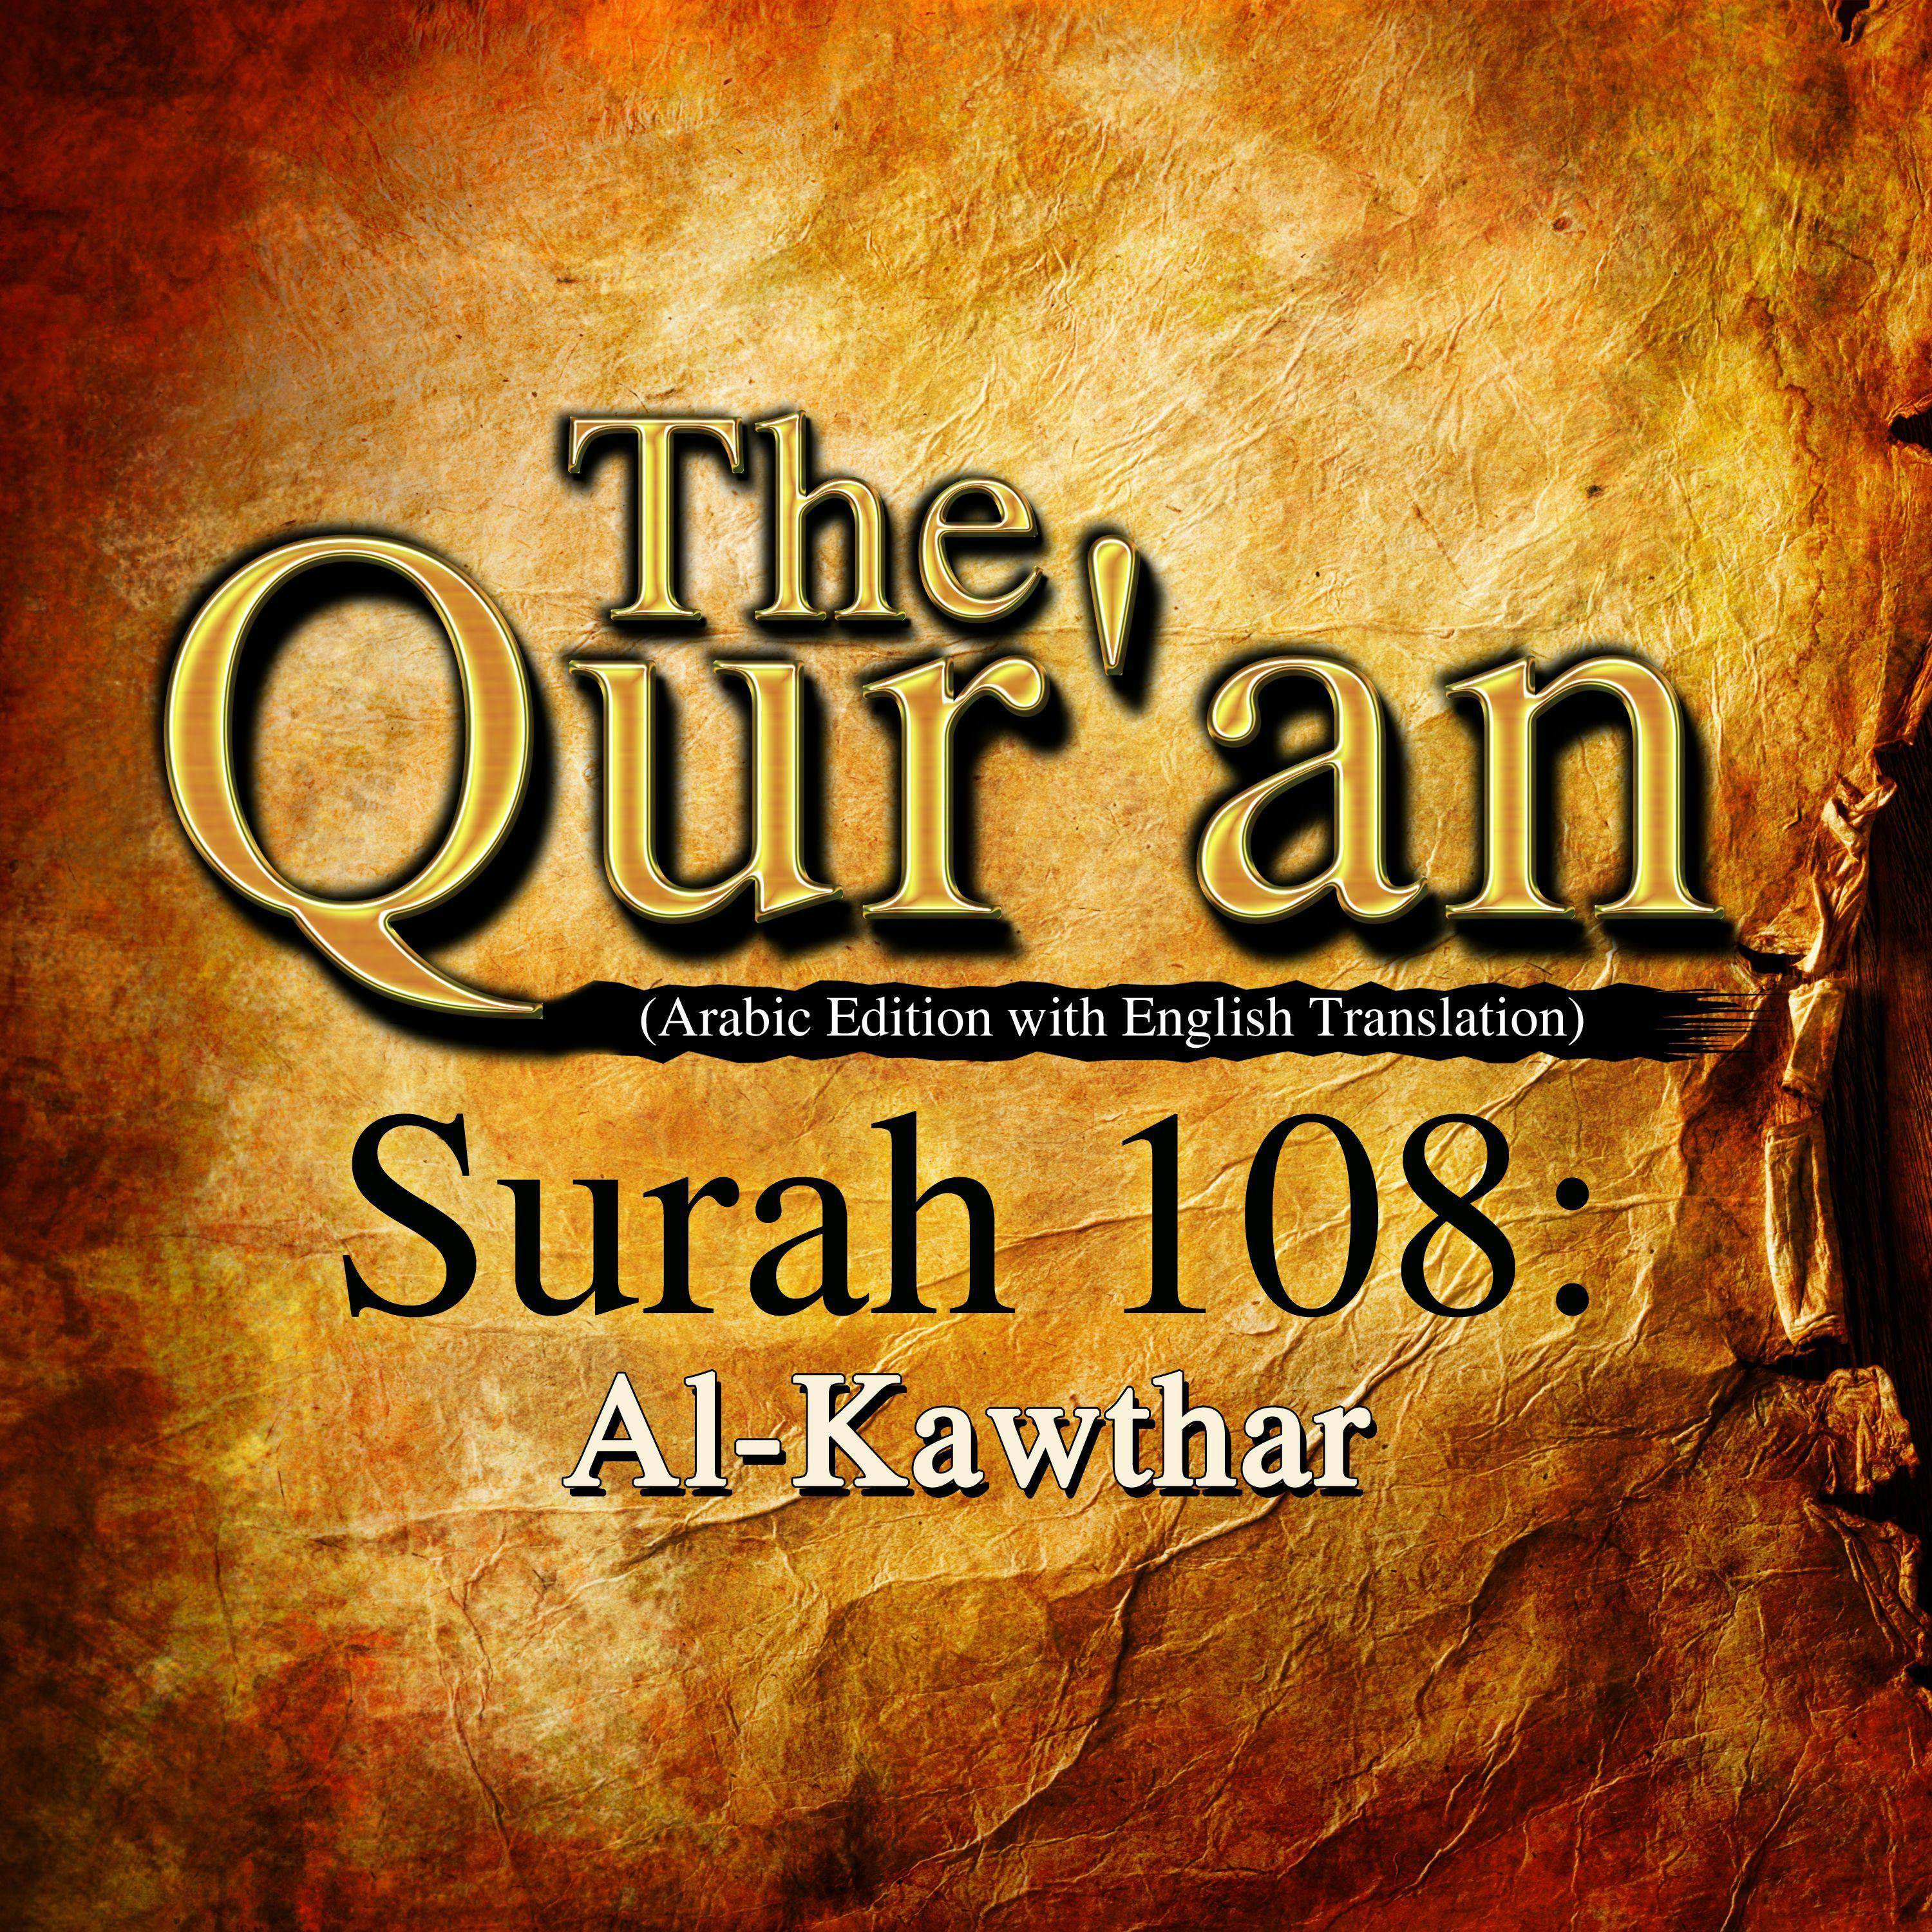 The Qur'an: Surah 108: Al-Kawthar - One Media iP LTD